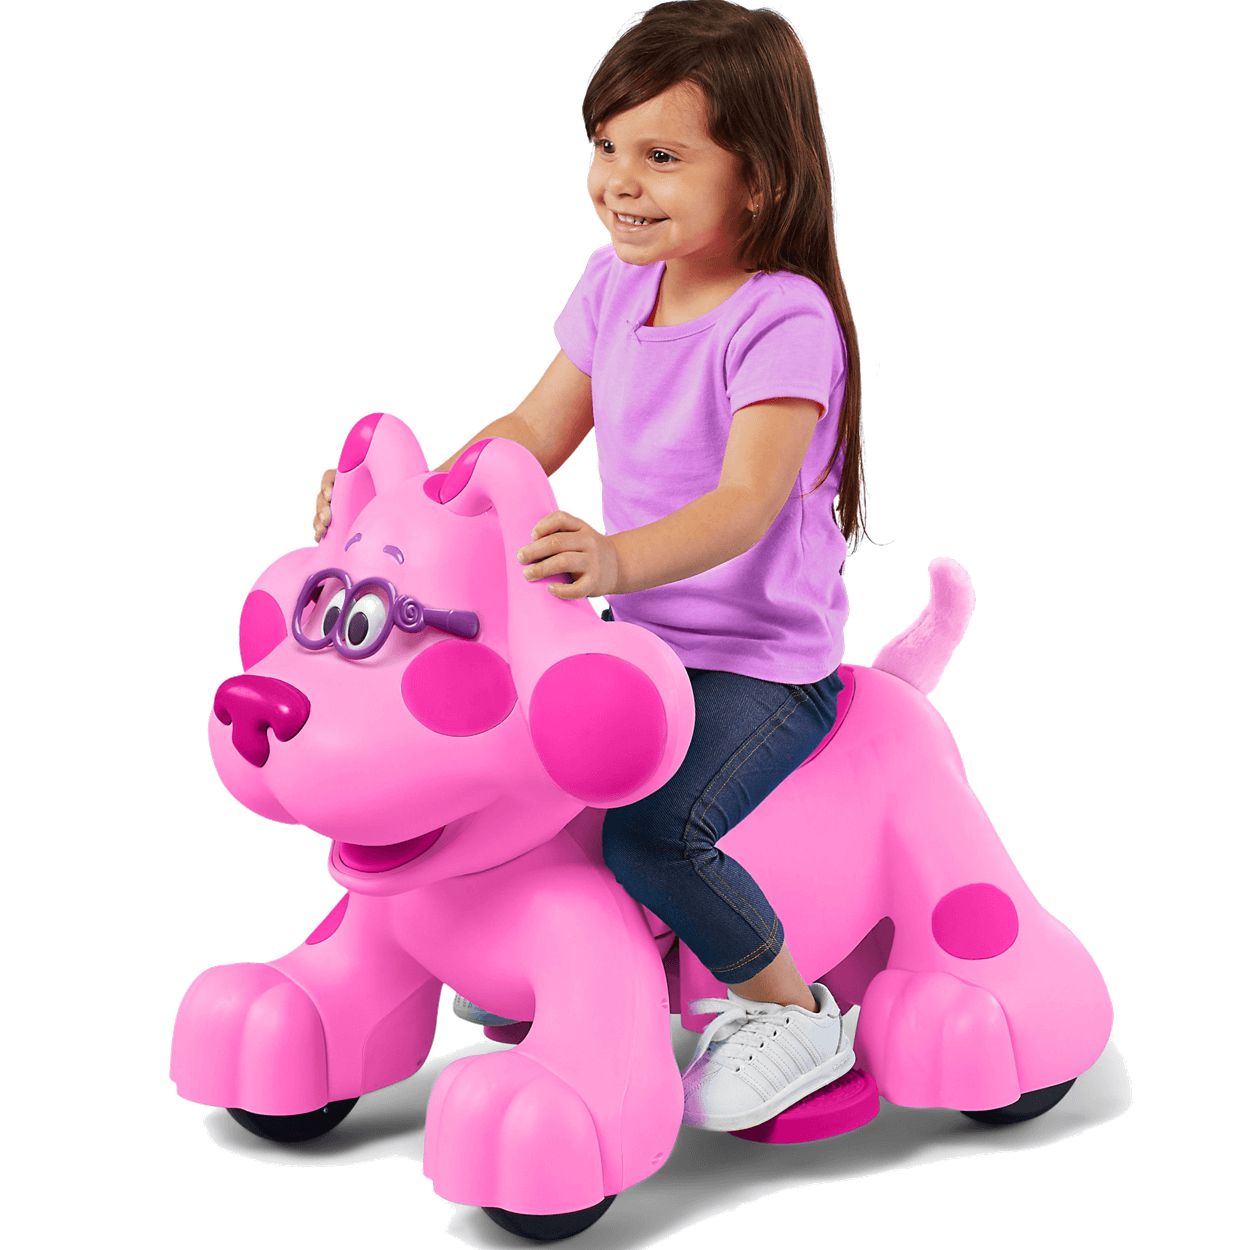 Moto Eletrica Infantil Bandeirante XT3 6V Fashion Rosa Pink - Maçã Verde  Baby